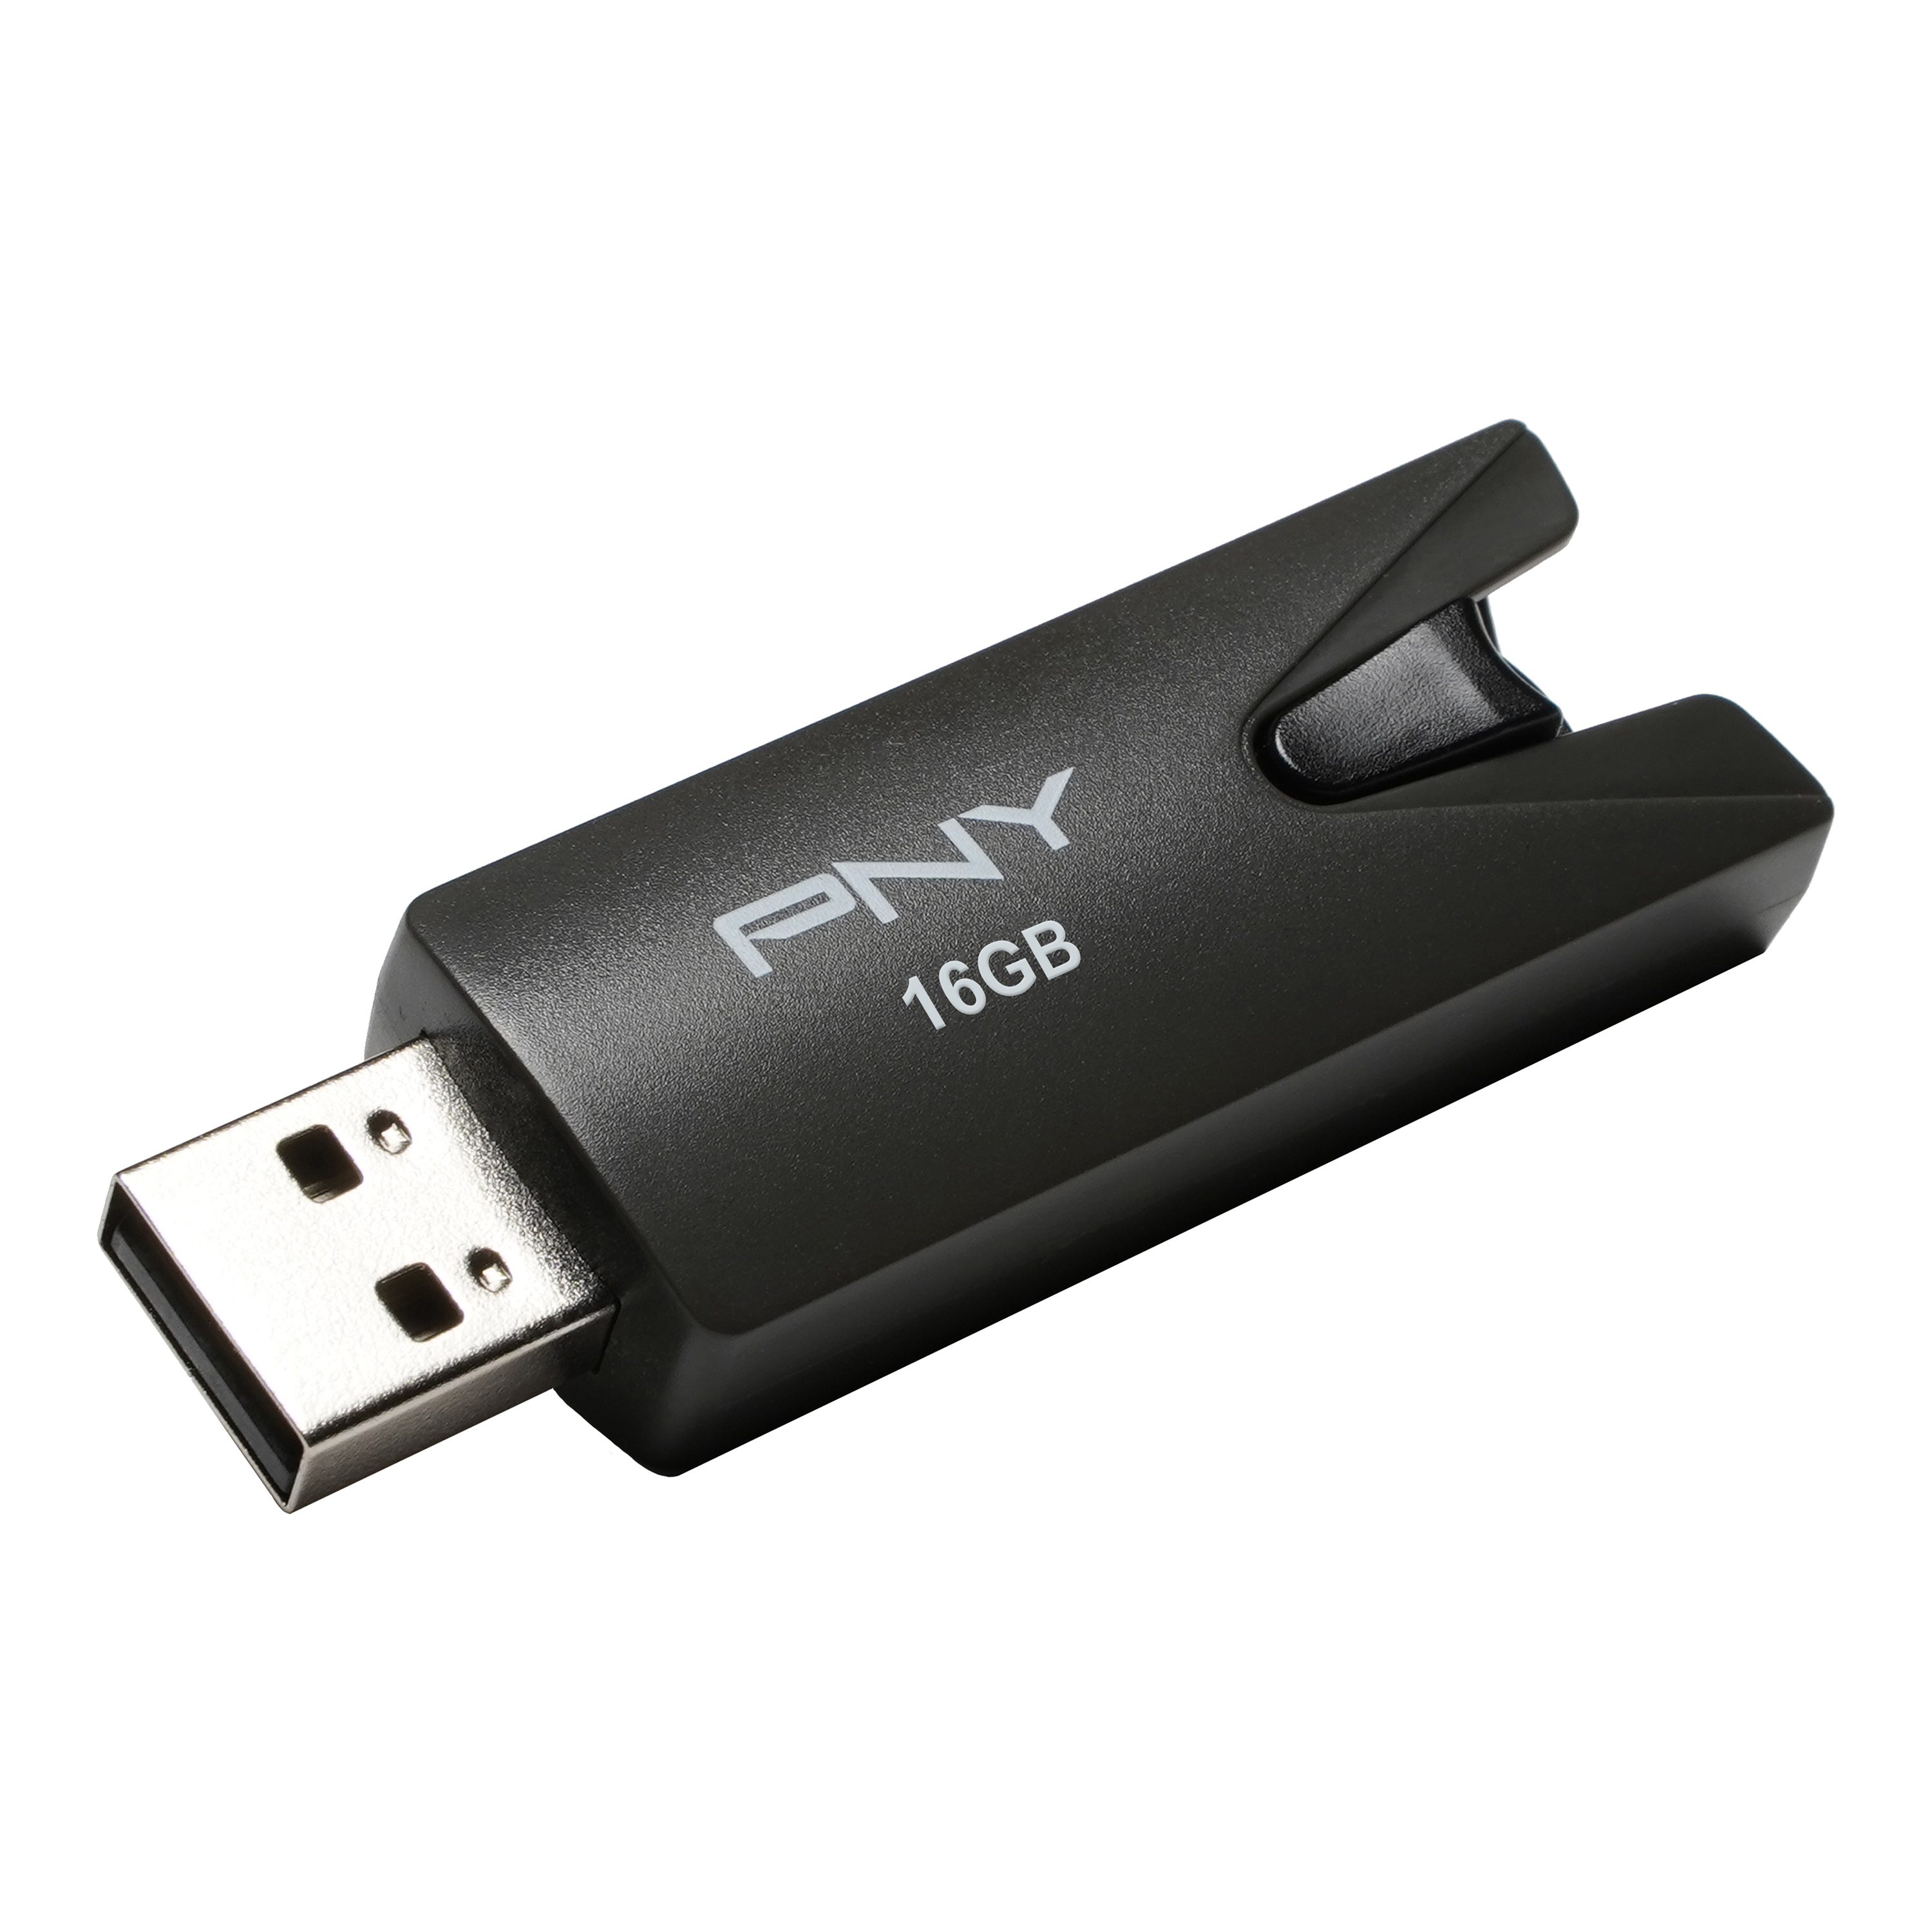 PNY 16GB Attache USB 2.0 Flash Drive - image 3 of 8